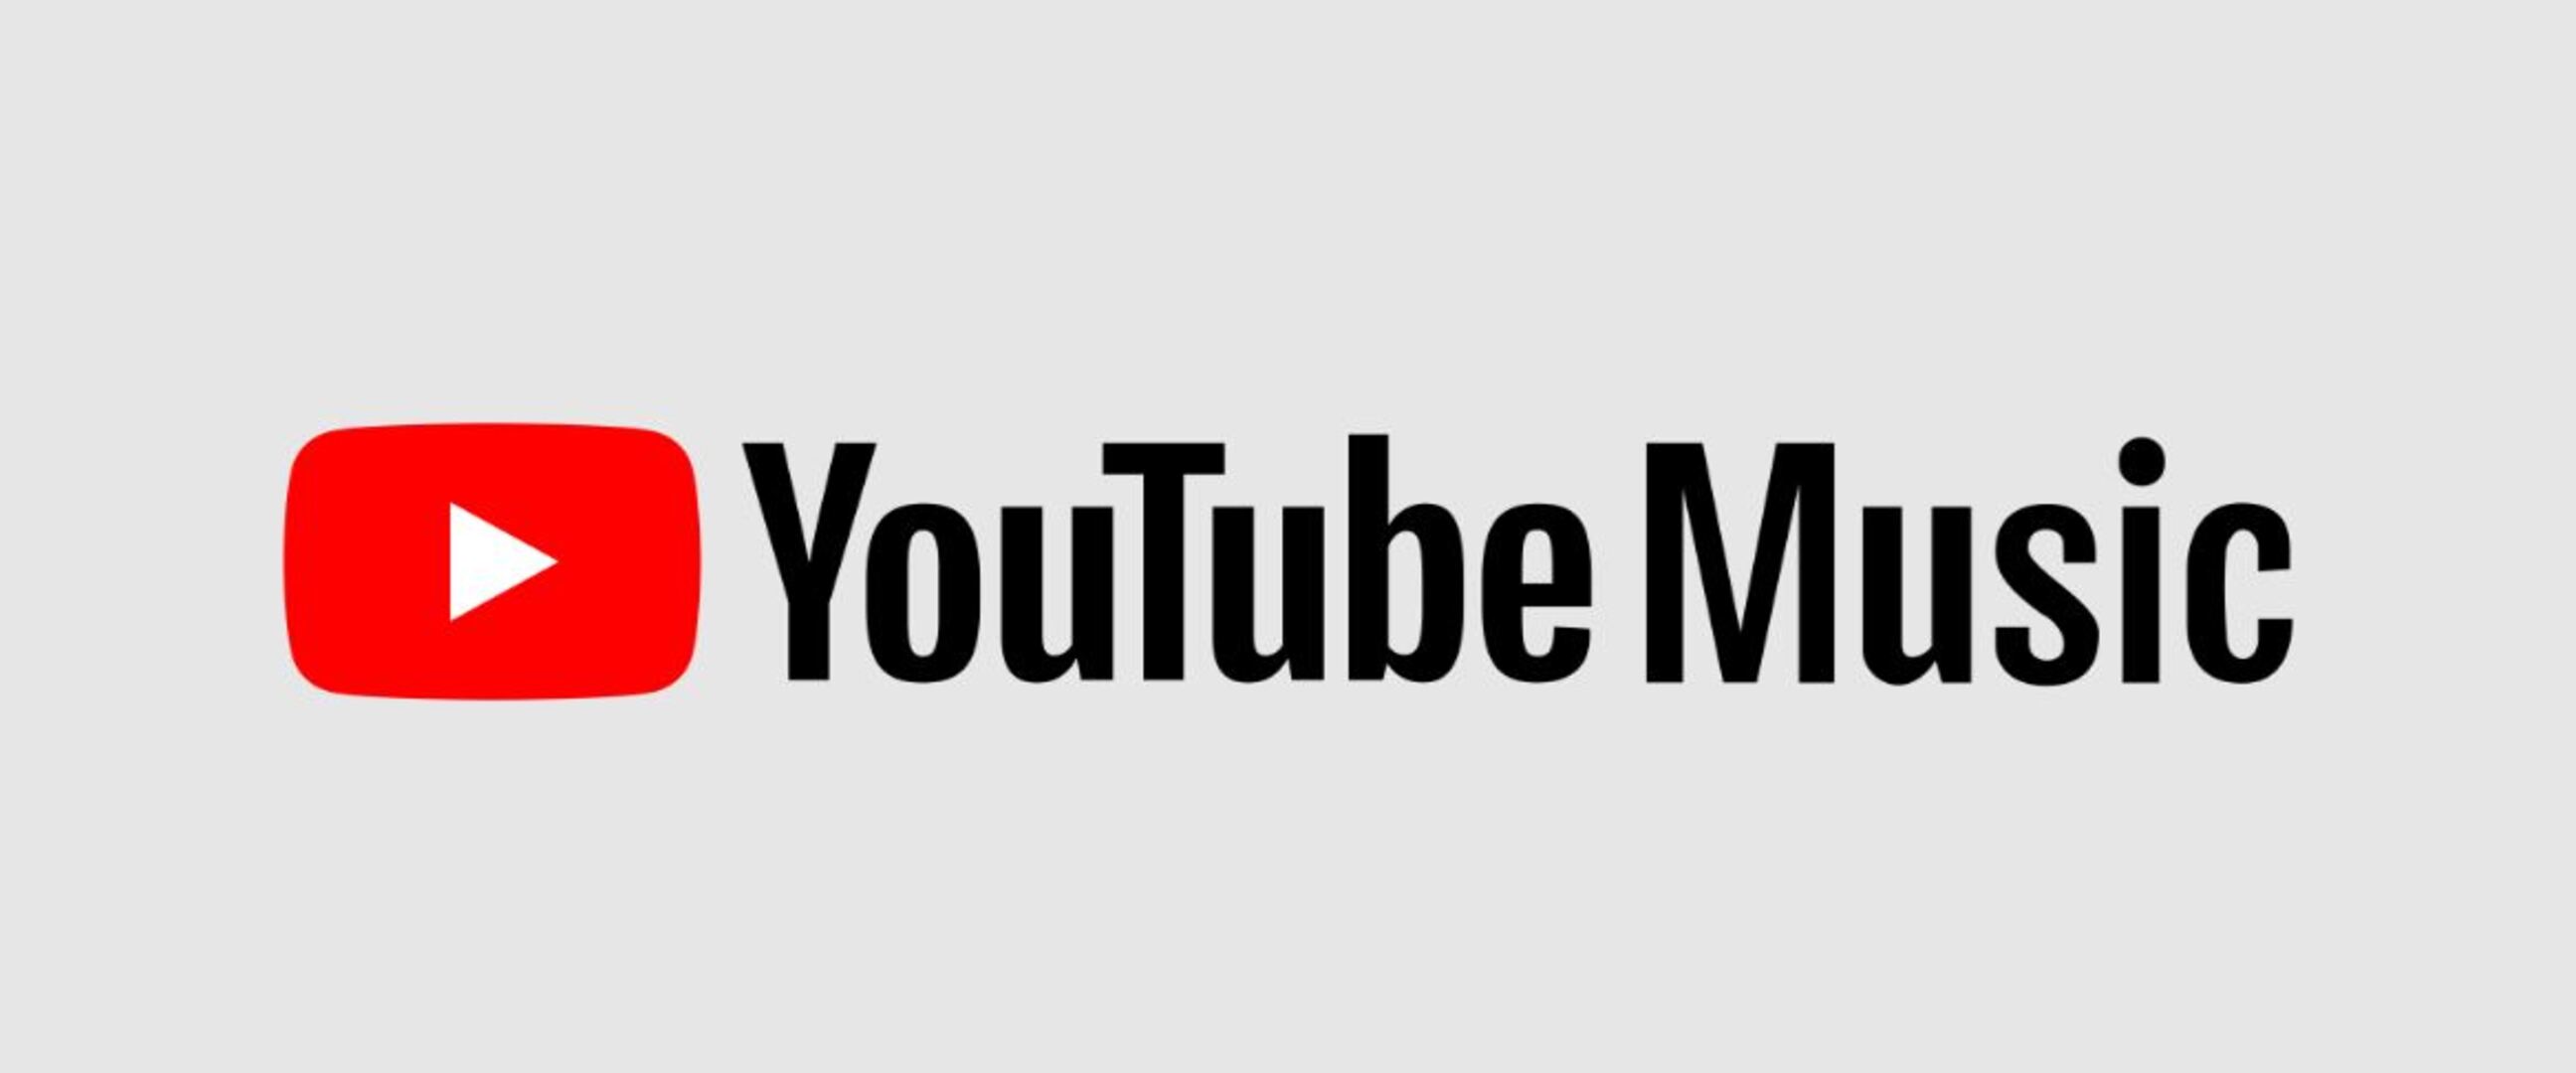 Fitur baru YouTube Music Energize mood, bikin suasana hati bersemangat